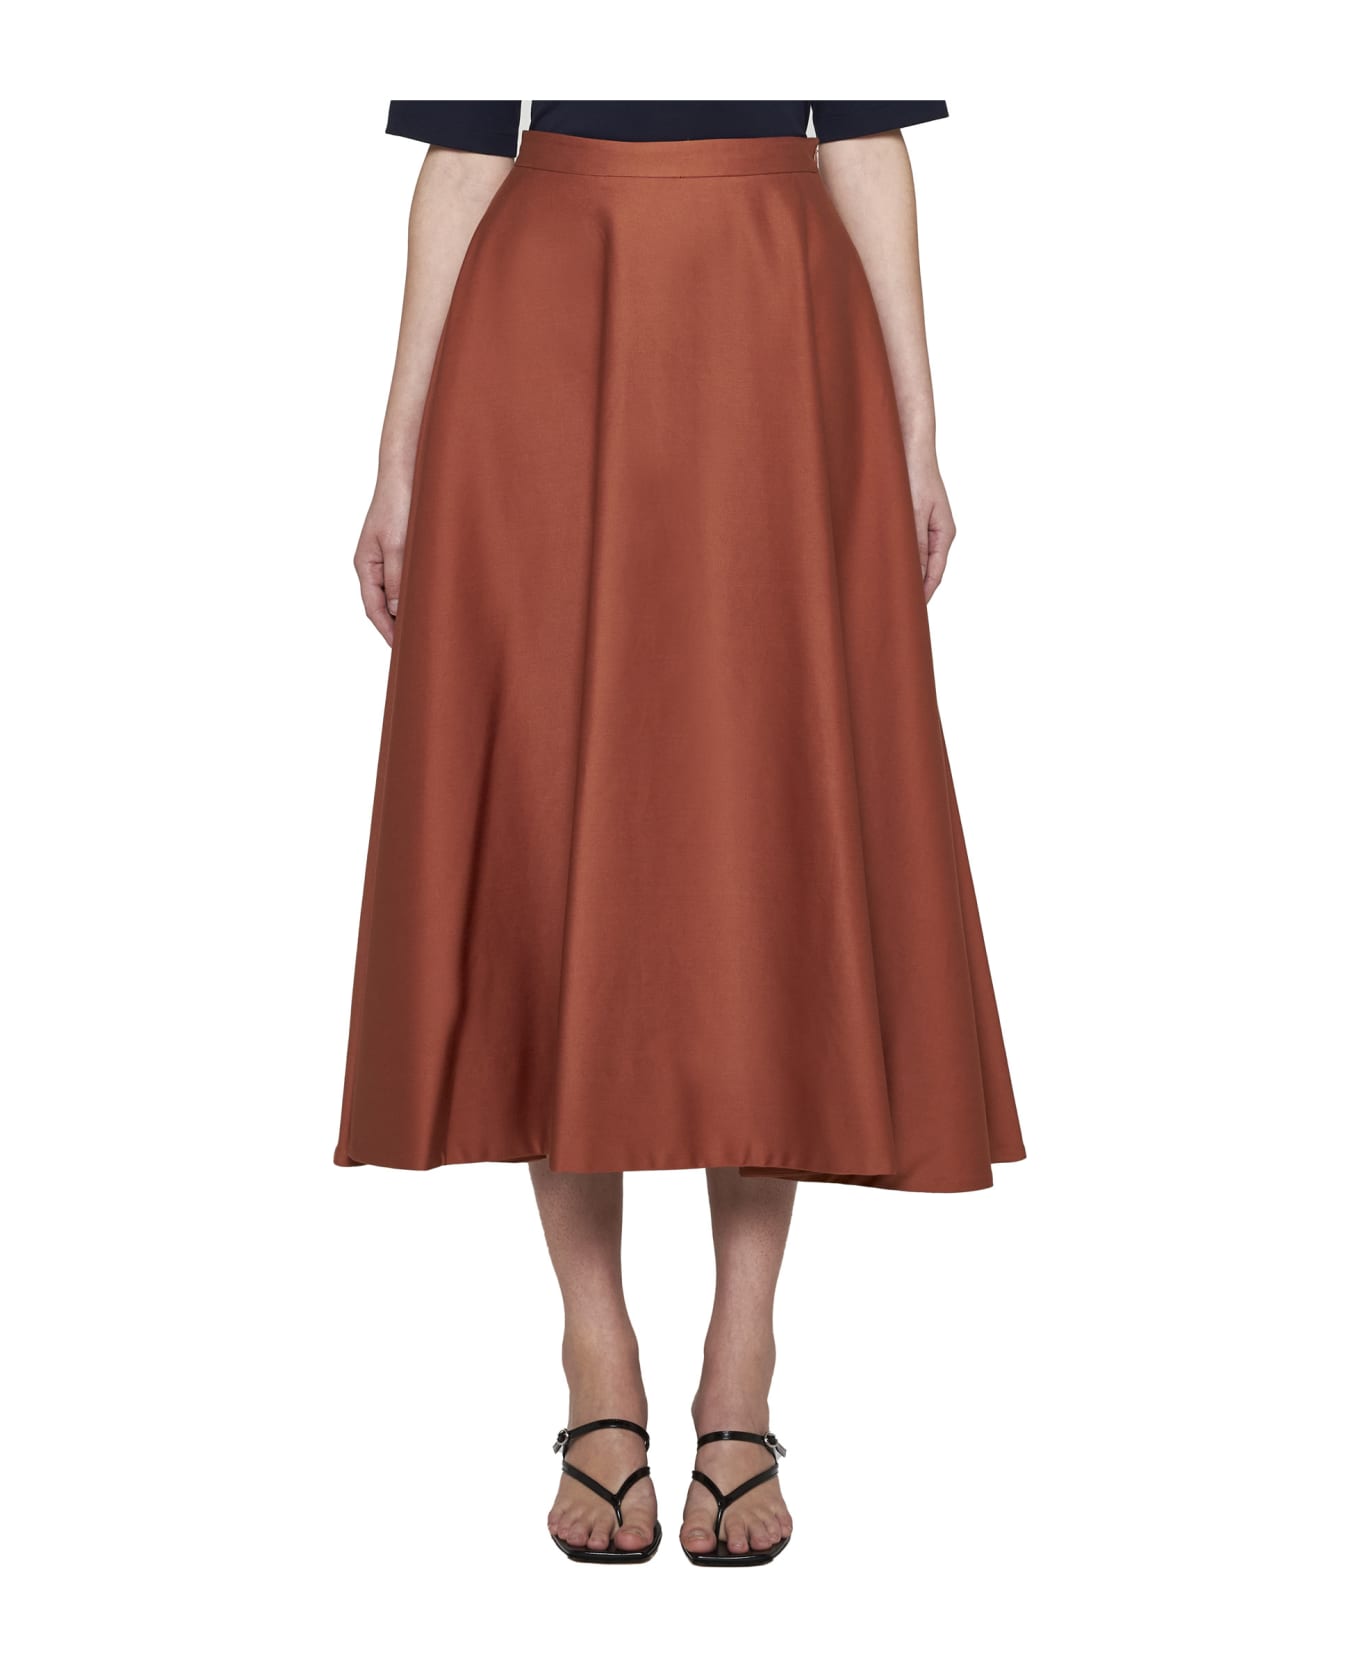 Blanca Vita Skirt - Cuoio スカート